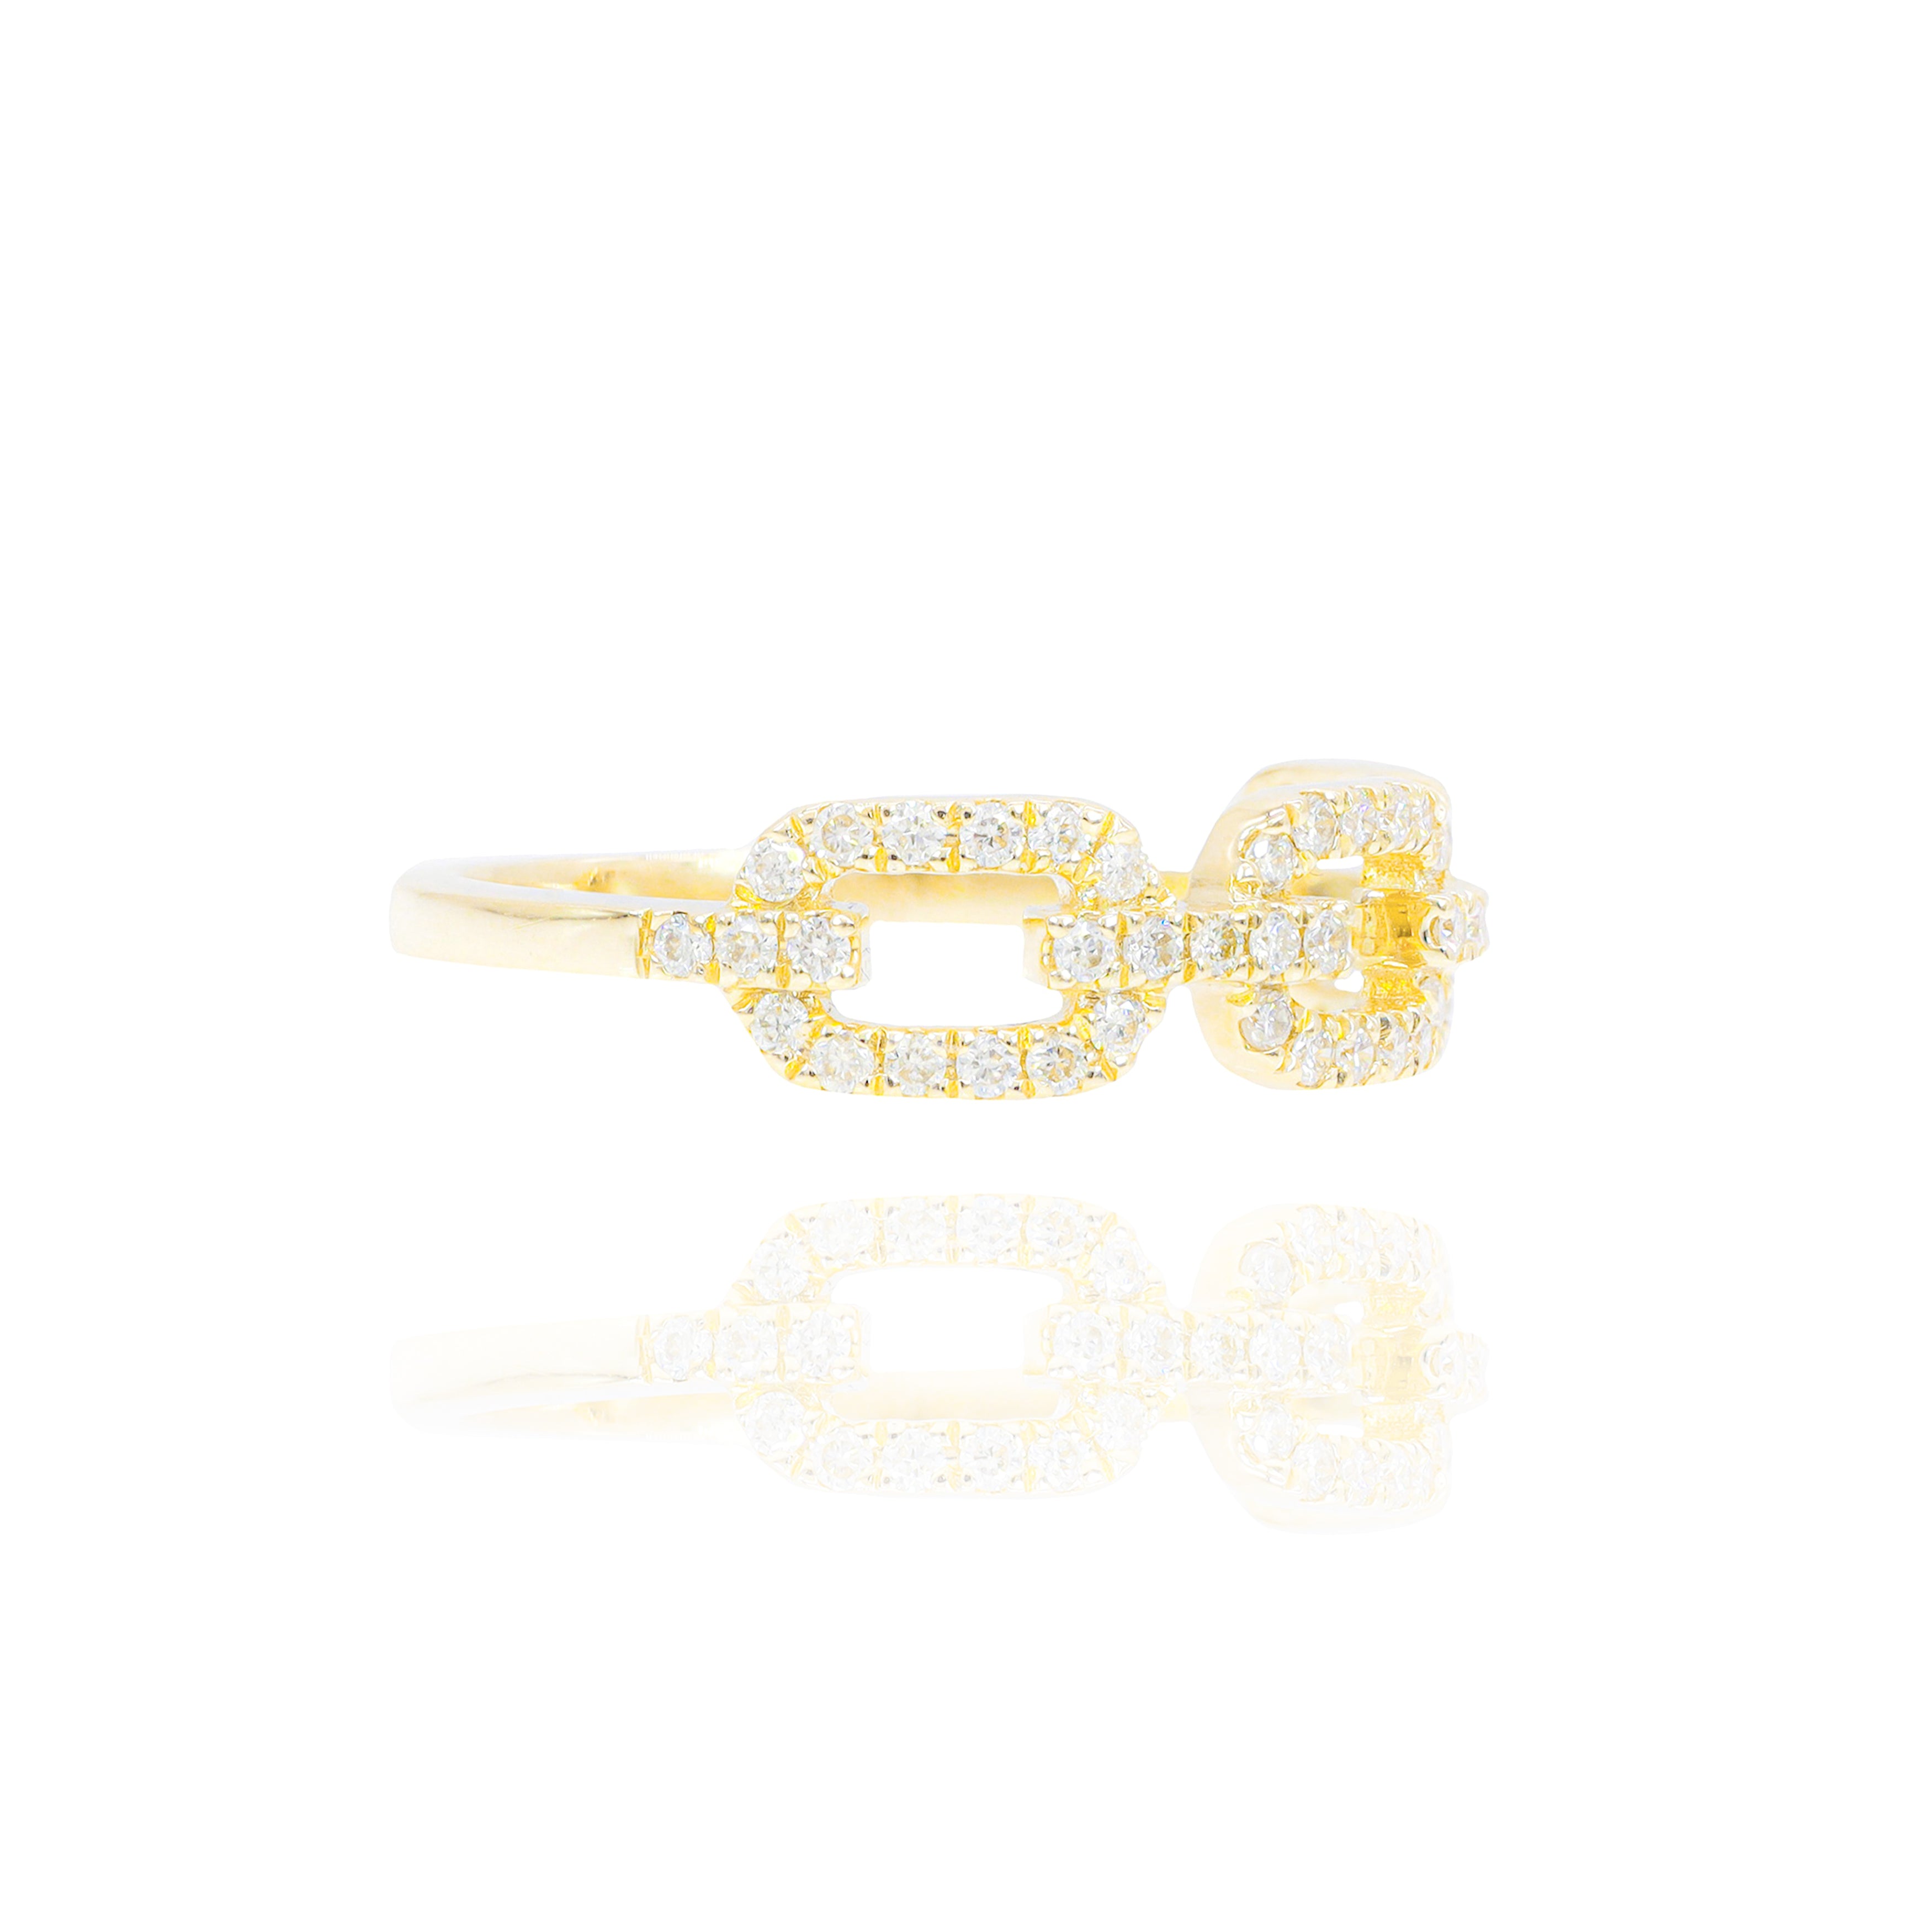 Hermes Style Diamond Ring